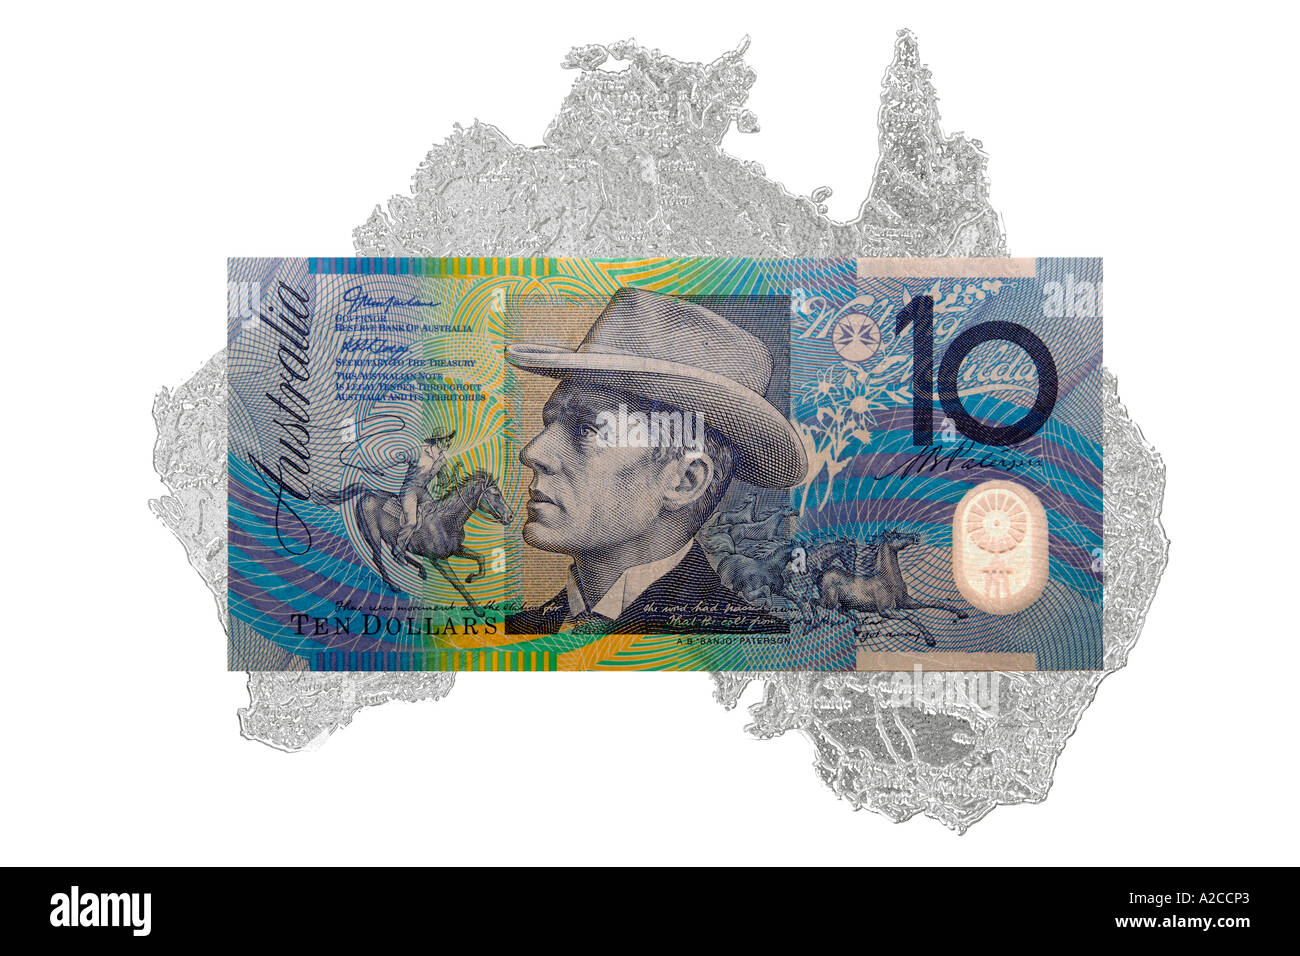 Australian 10 dollar note against a cutout shape of Australia. Stock Photo